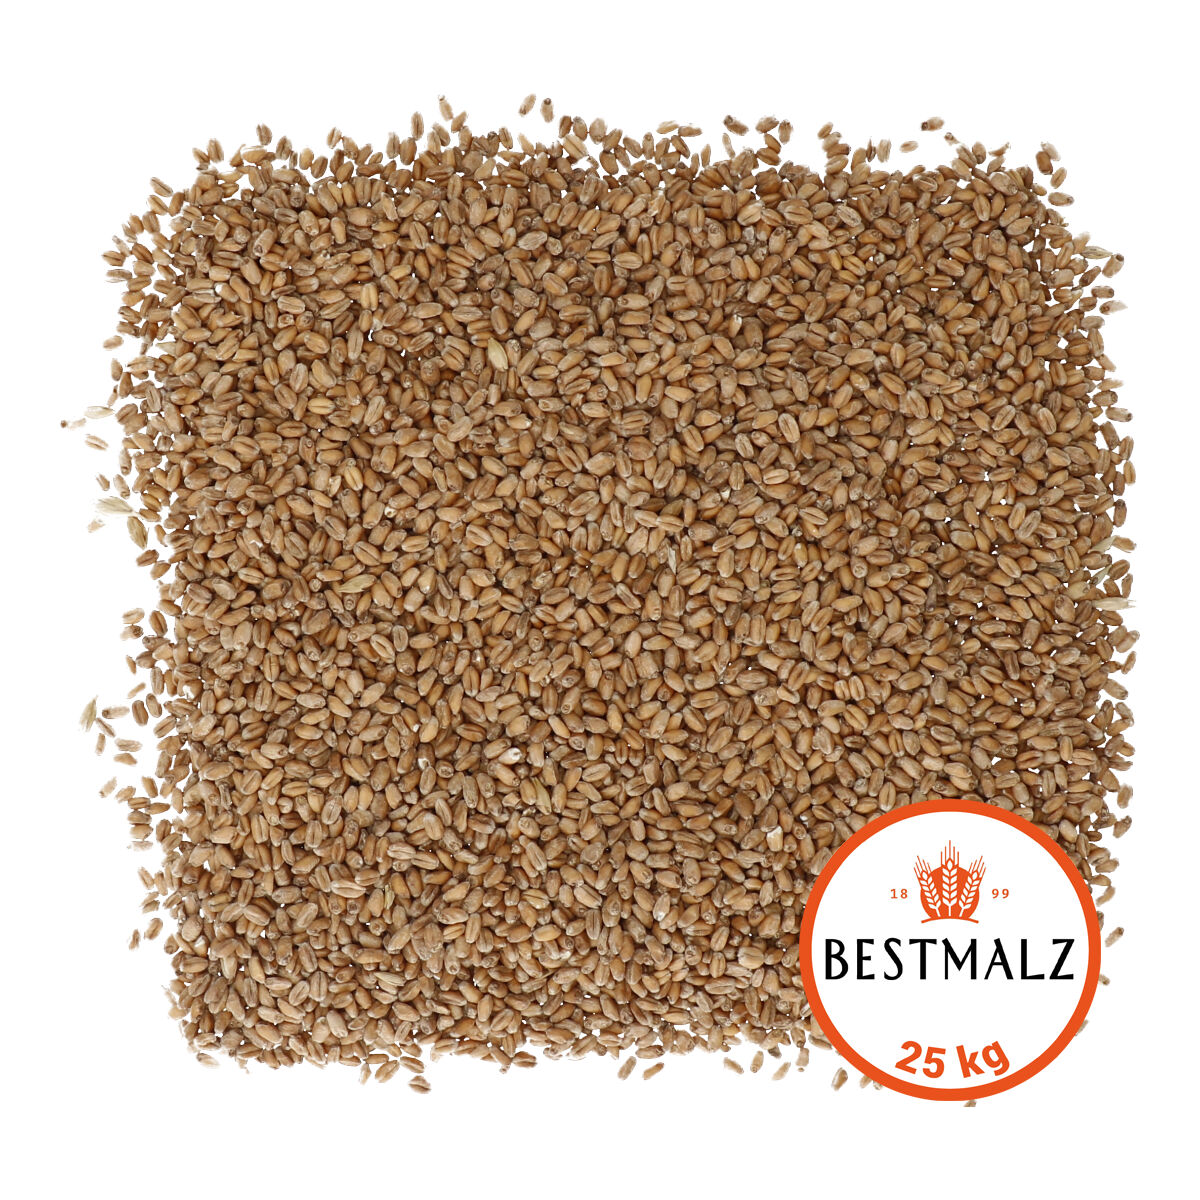 Bestmalz Heidelberger Wheat Malt 25 kg